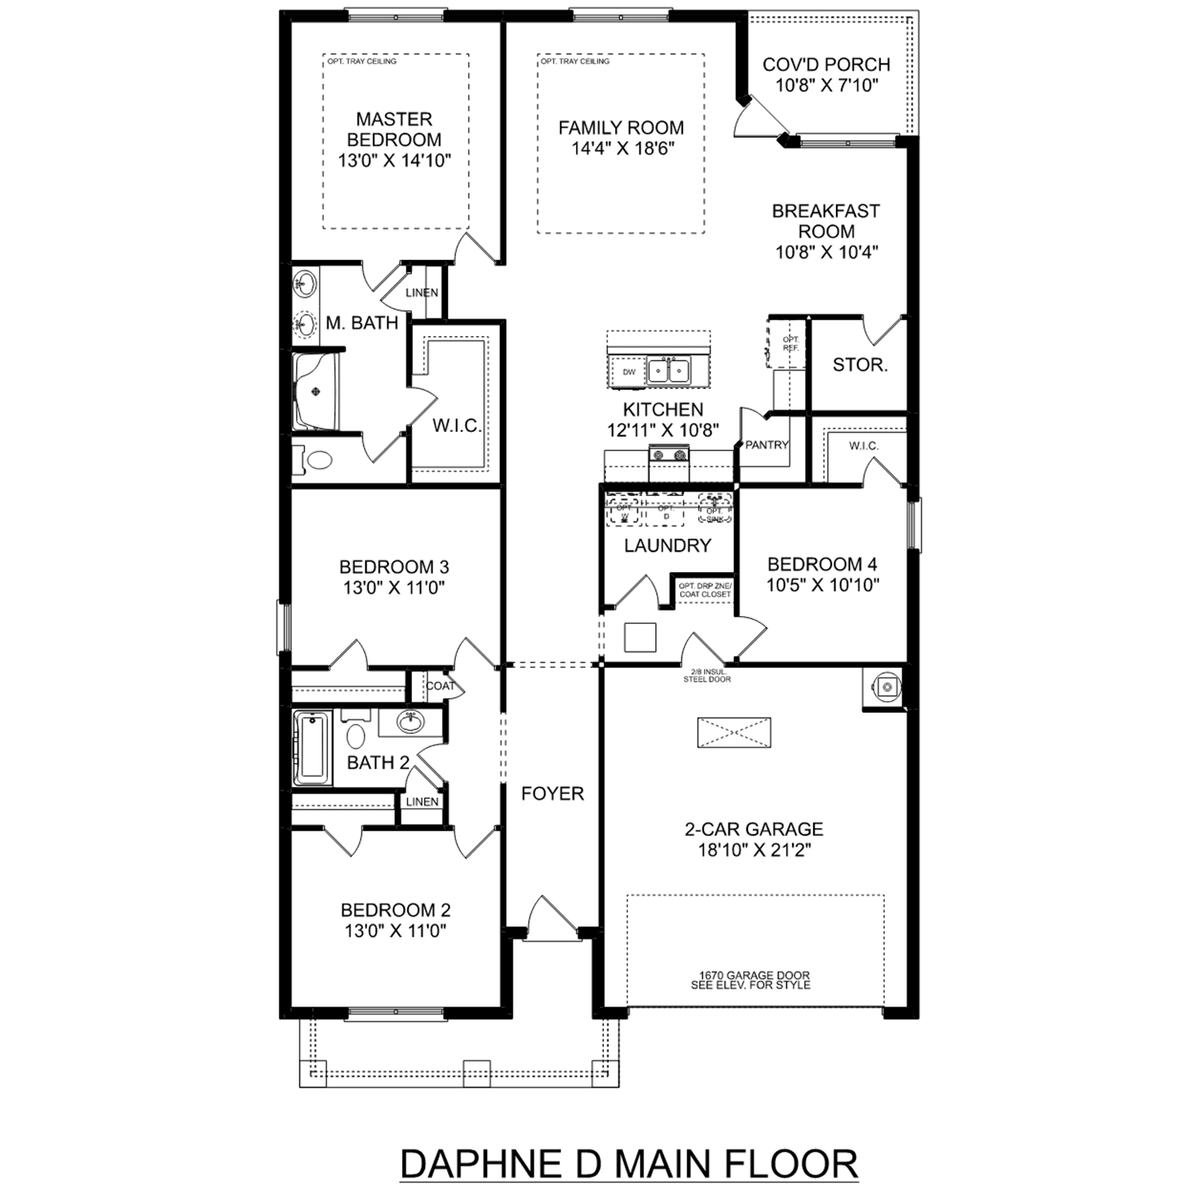 1 - The Daphne D floor plan layout for 27324 Mckenna Drive in Davidson Homes' Mallard Landing community.